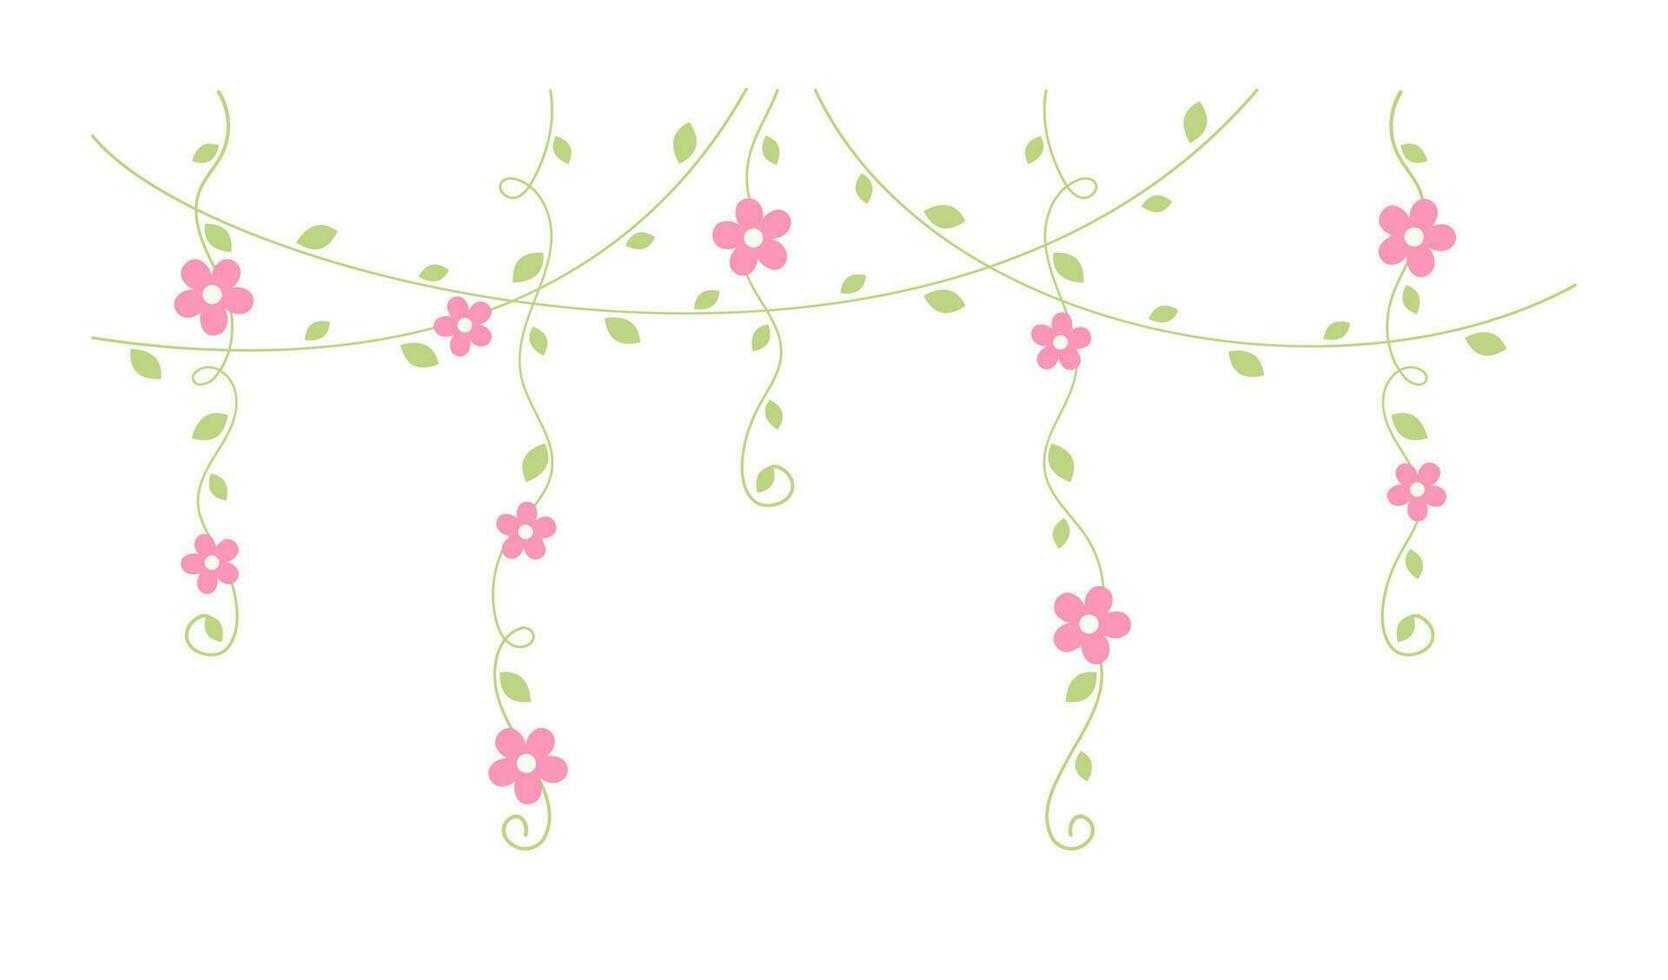 Hanging vines with pink flowers vector illustration. Simple minimal floral botanical vine curtain design elements for spring.